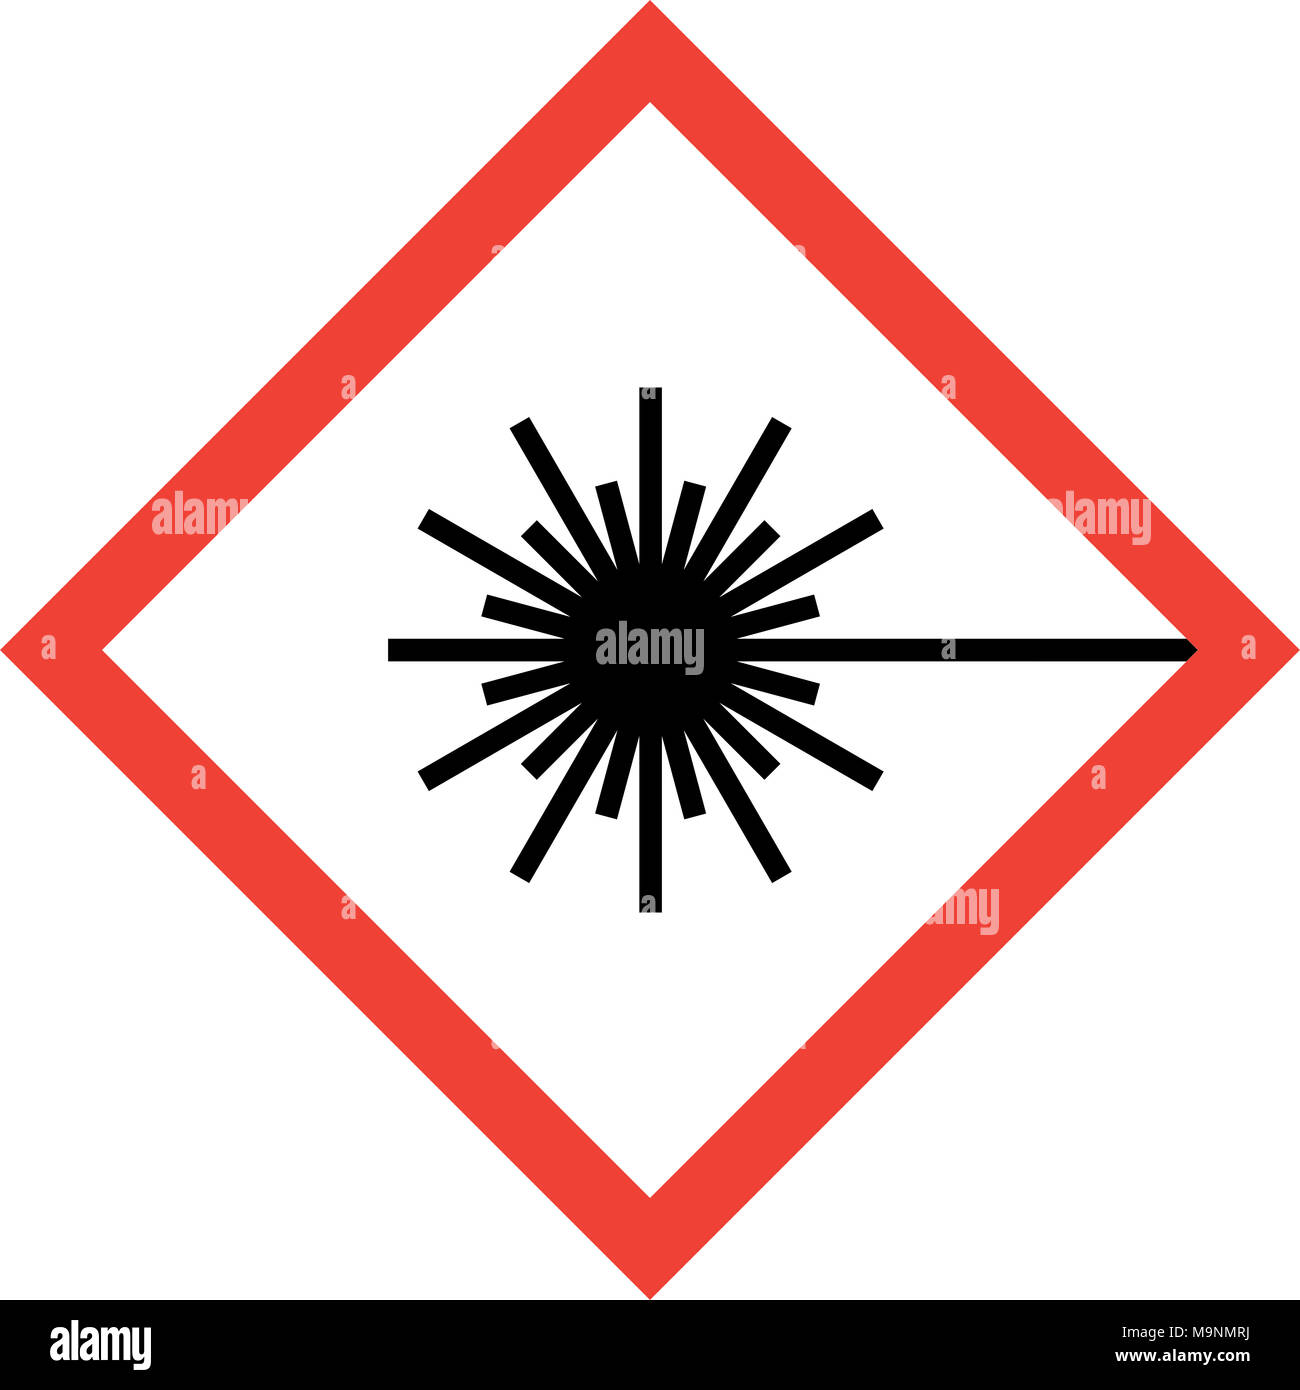 Hazard sign with laser beam symbol Stock Photo - Alamy